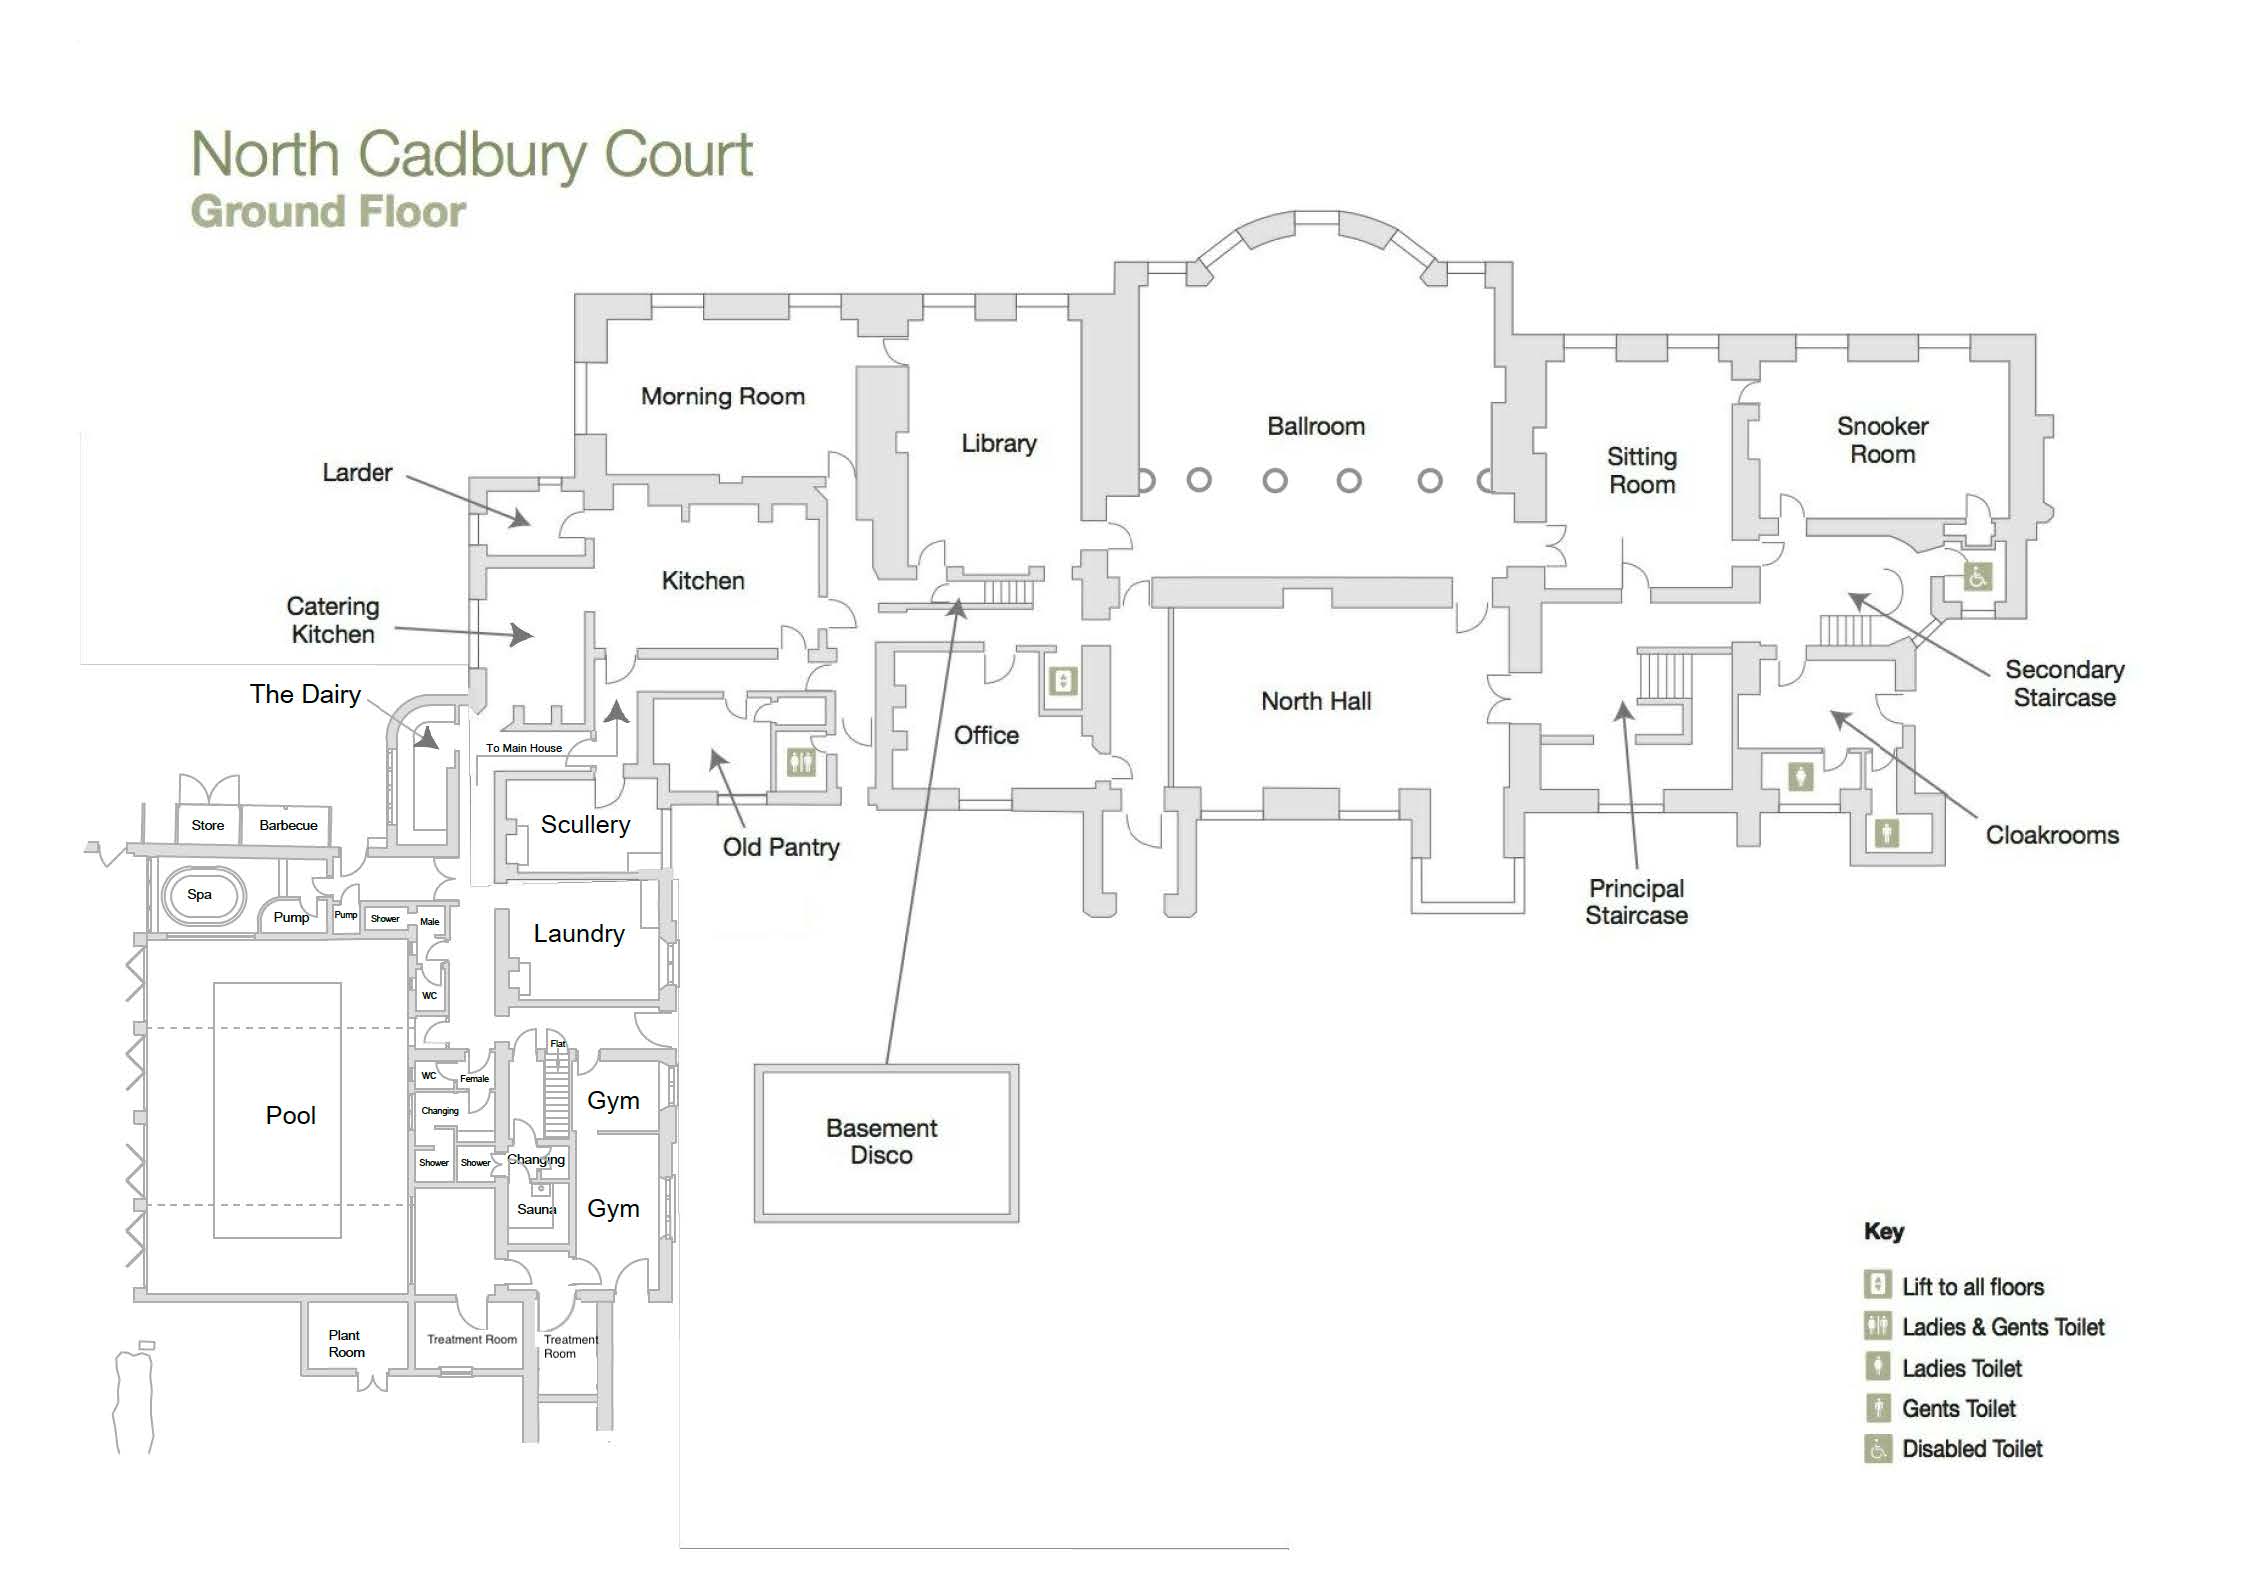 Floor Plan Ground Floor - North Cadbury Court